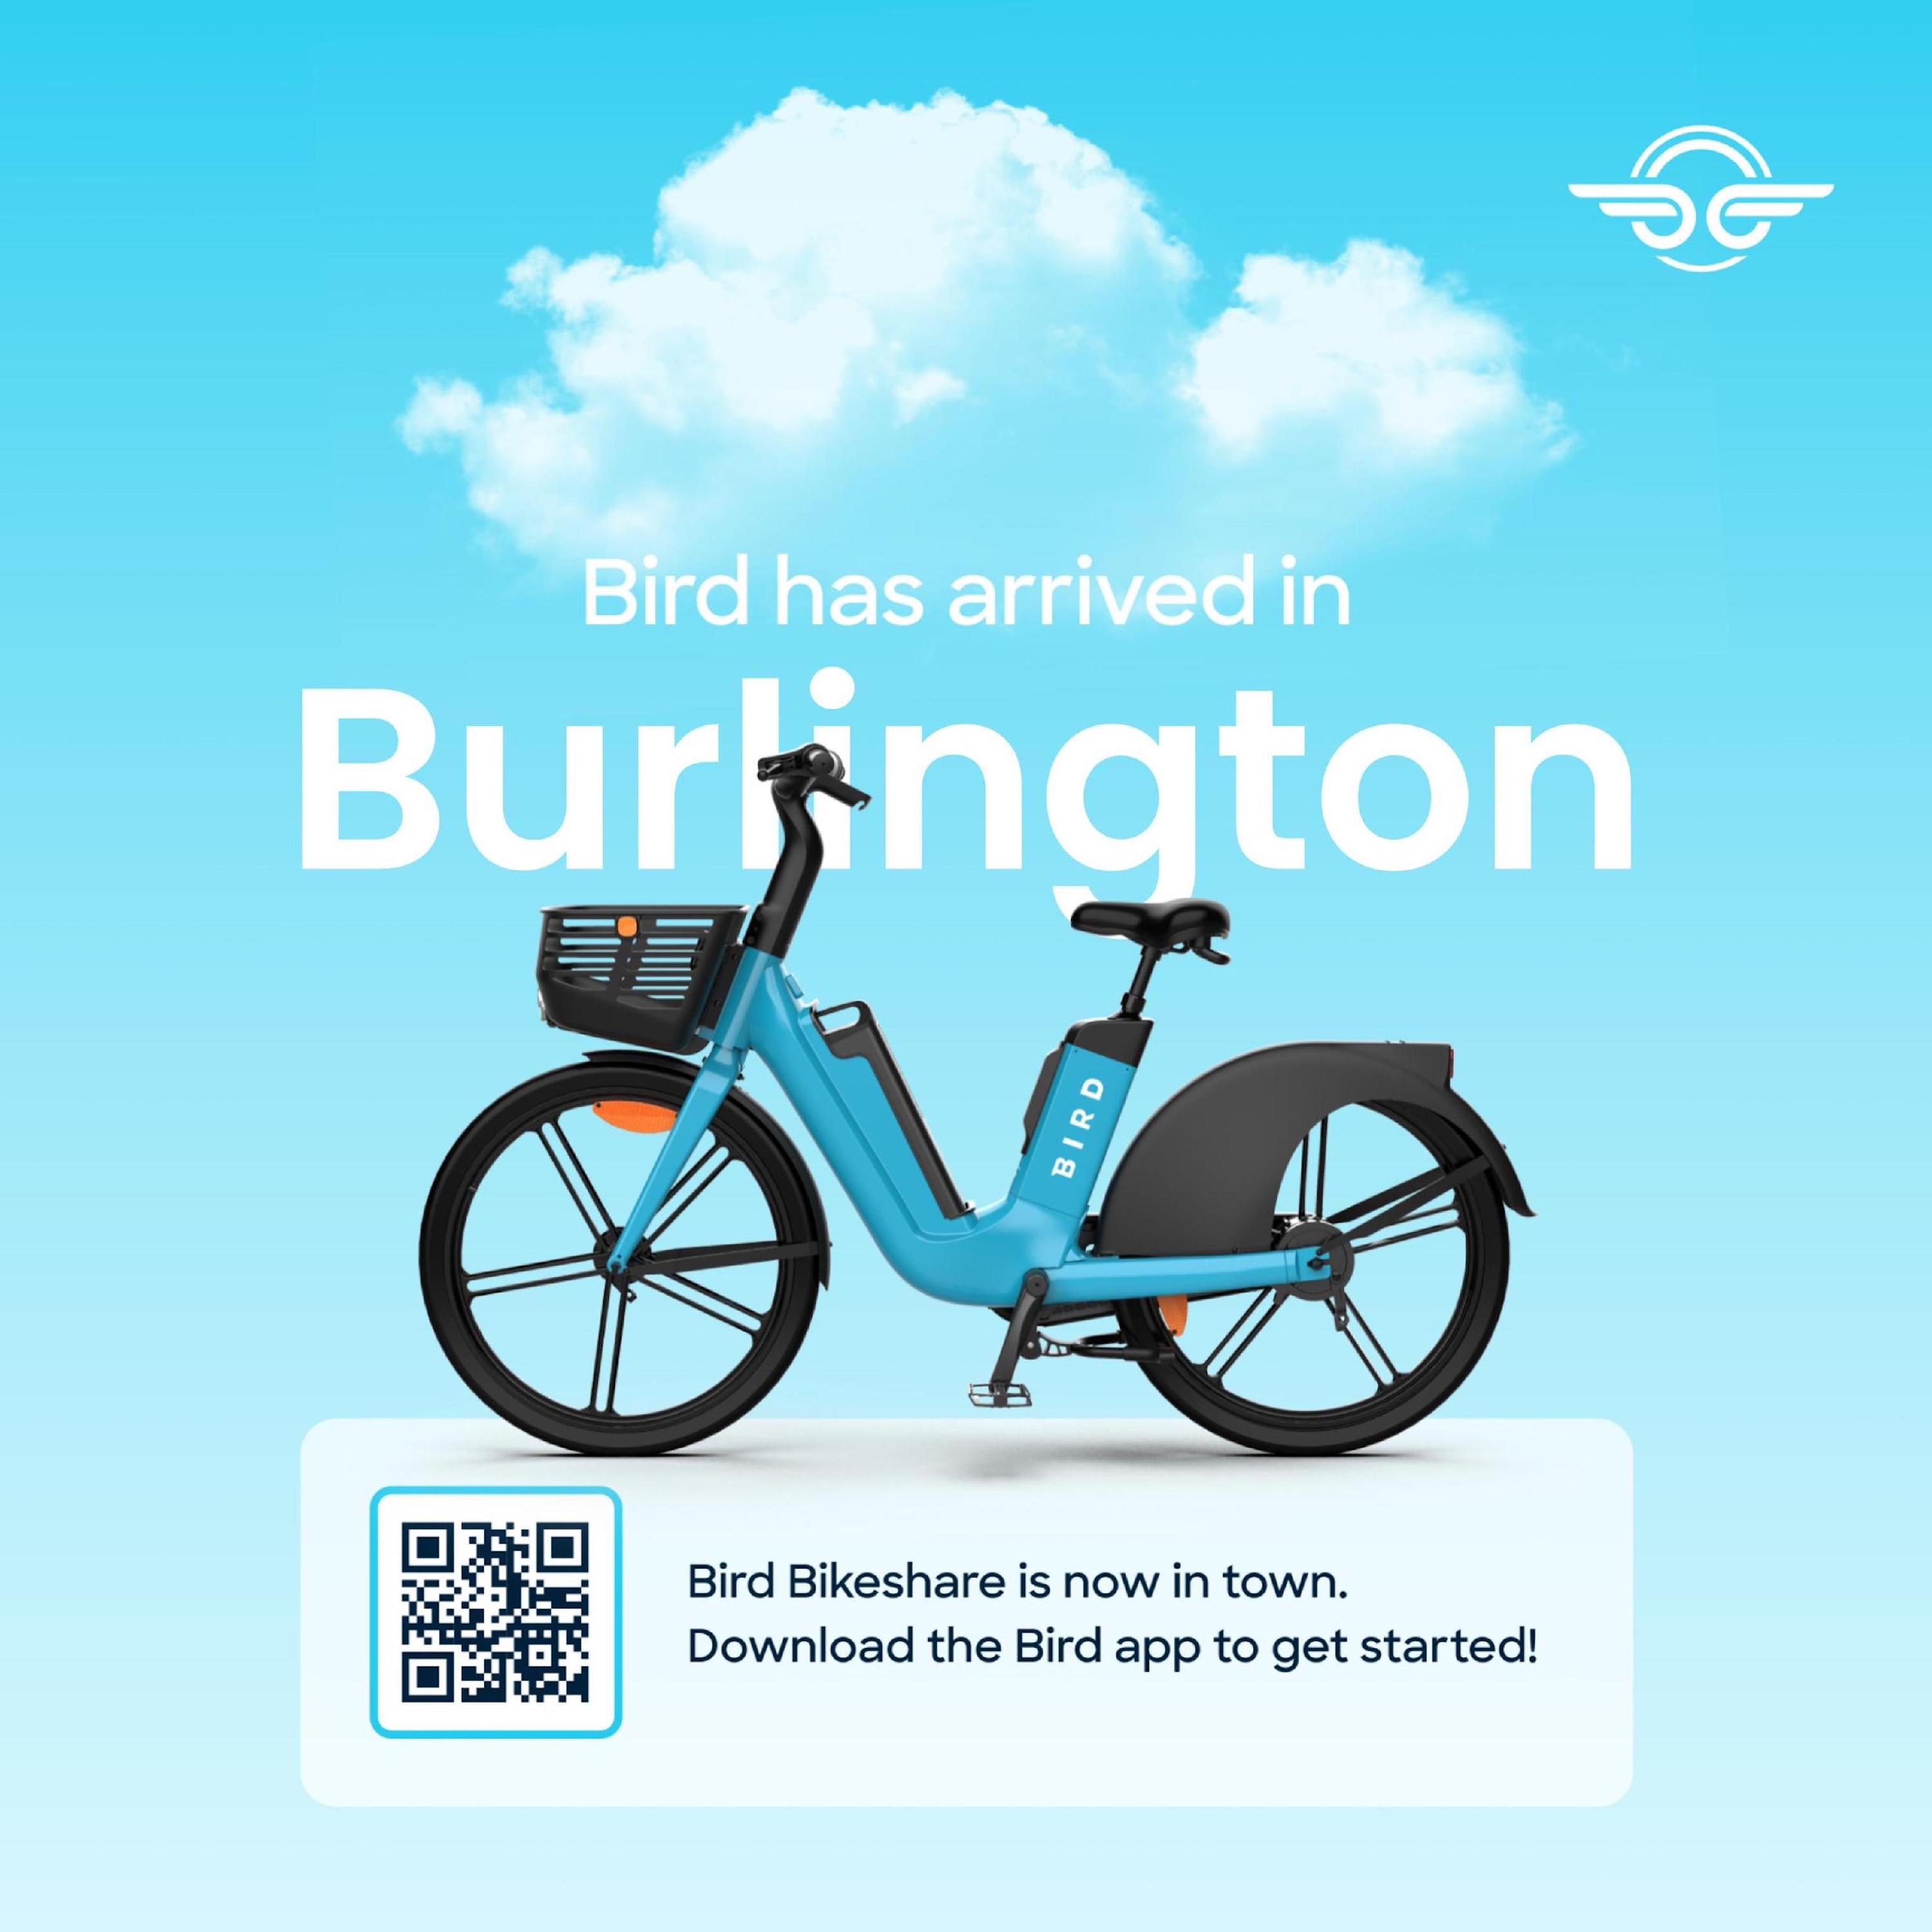 Burlington - Bird Has Arrived 818KB